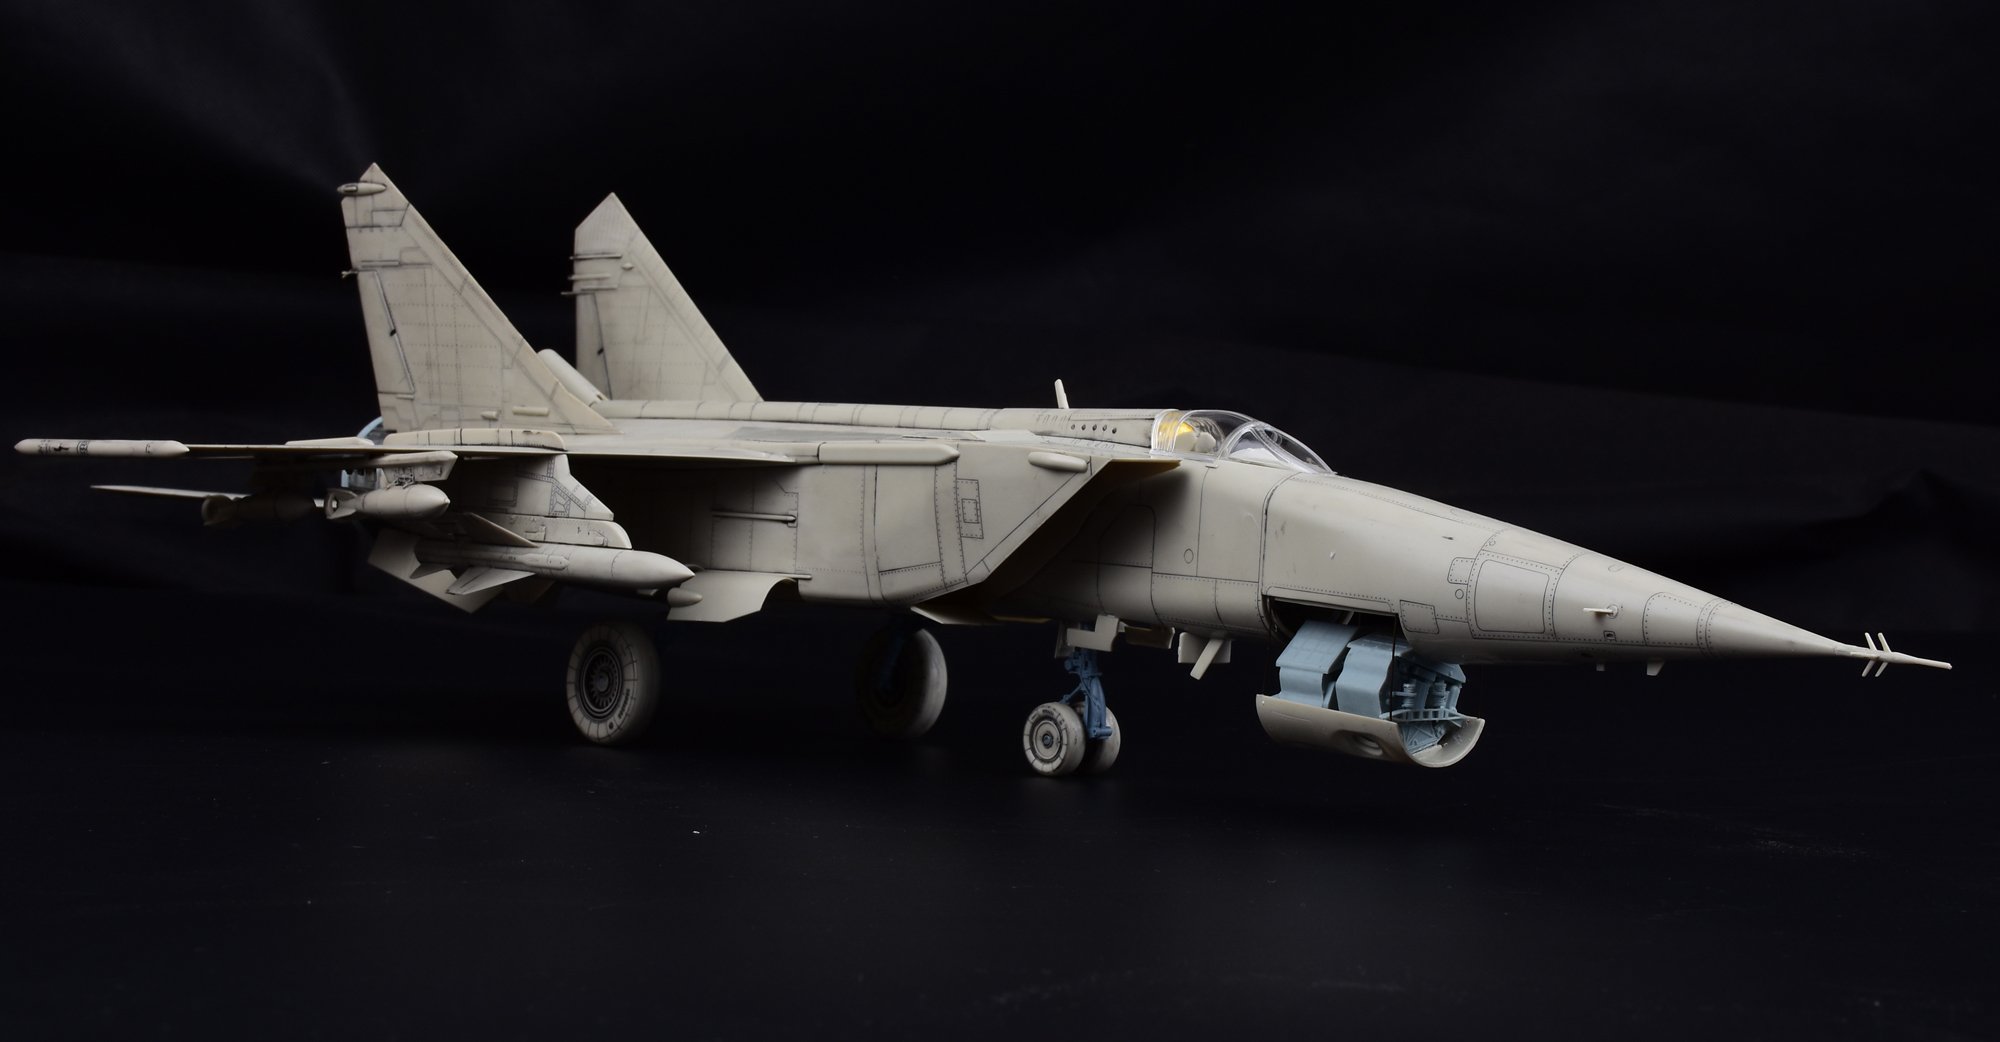 1/48 MiG-25RB/RBS 狐蝠侦察机